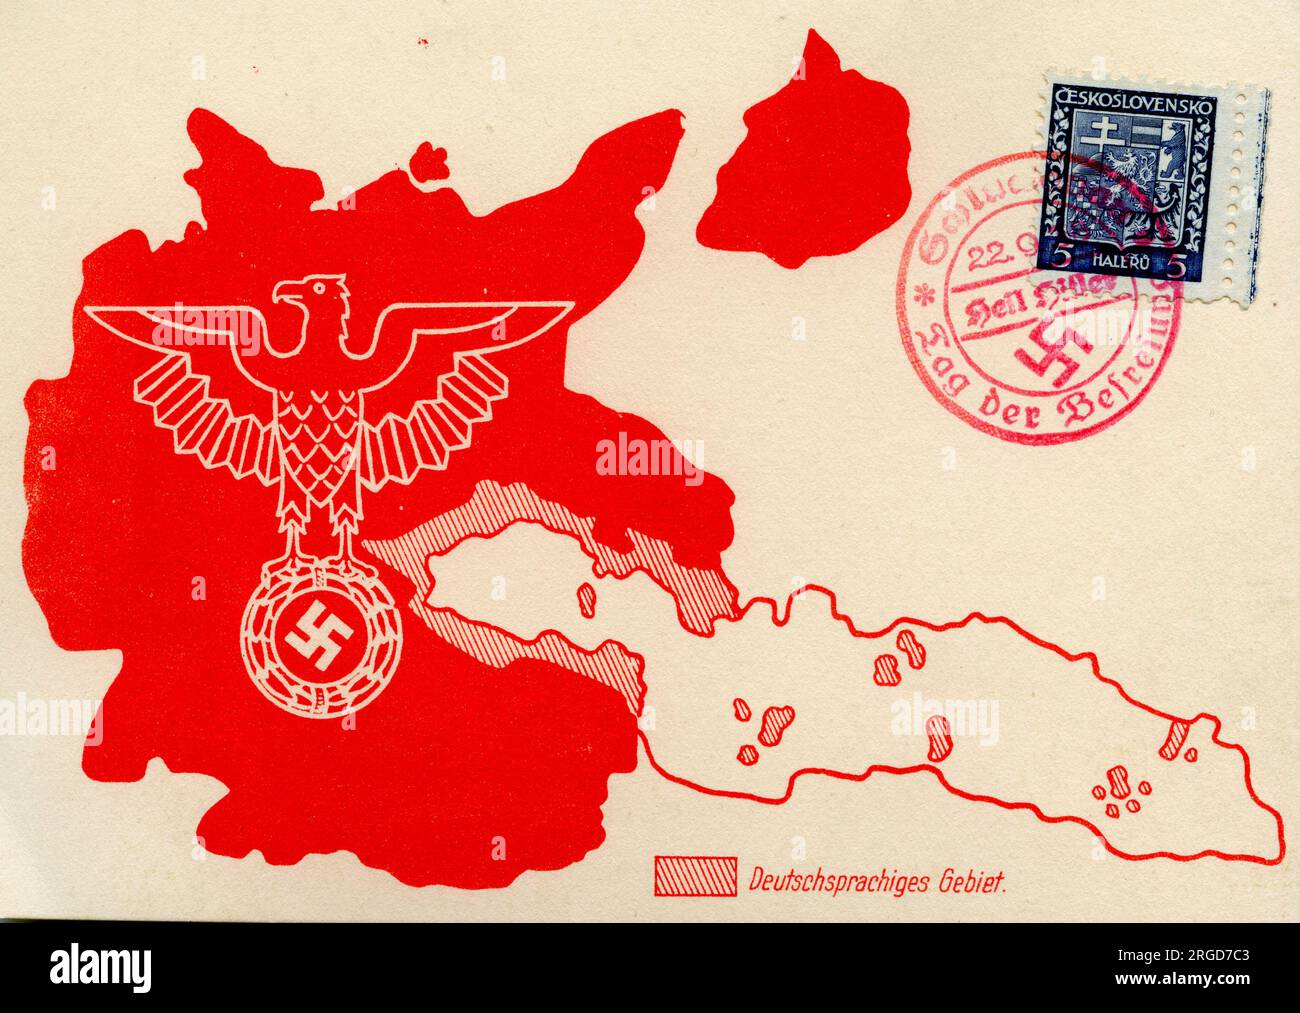 Nazi Germany occupation of Czechoslovakia commemorative card and postmark Stock Photo